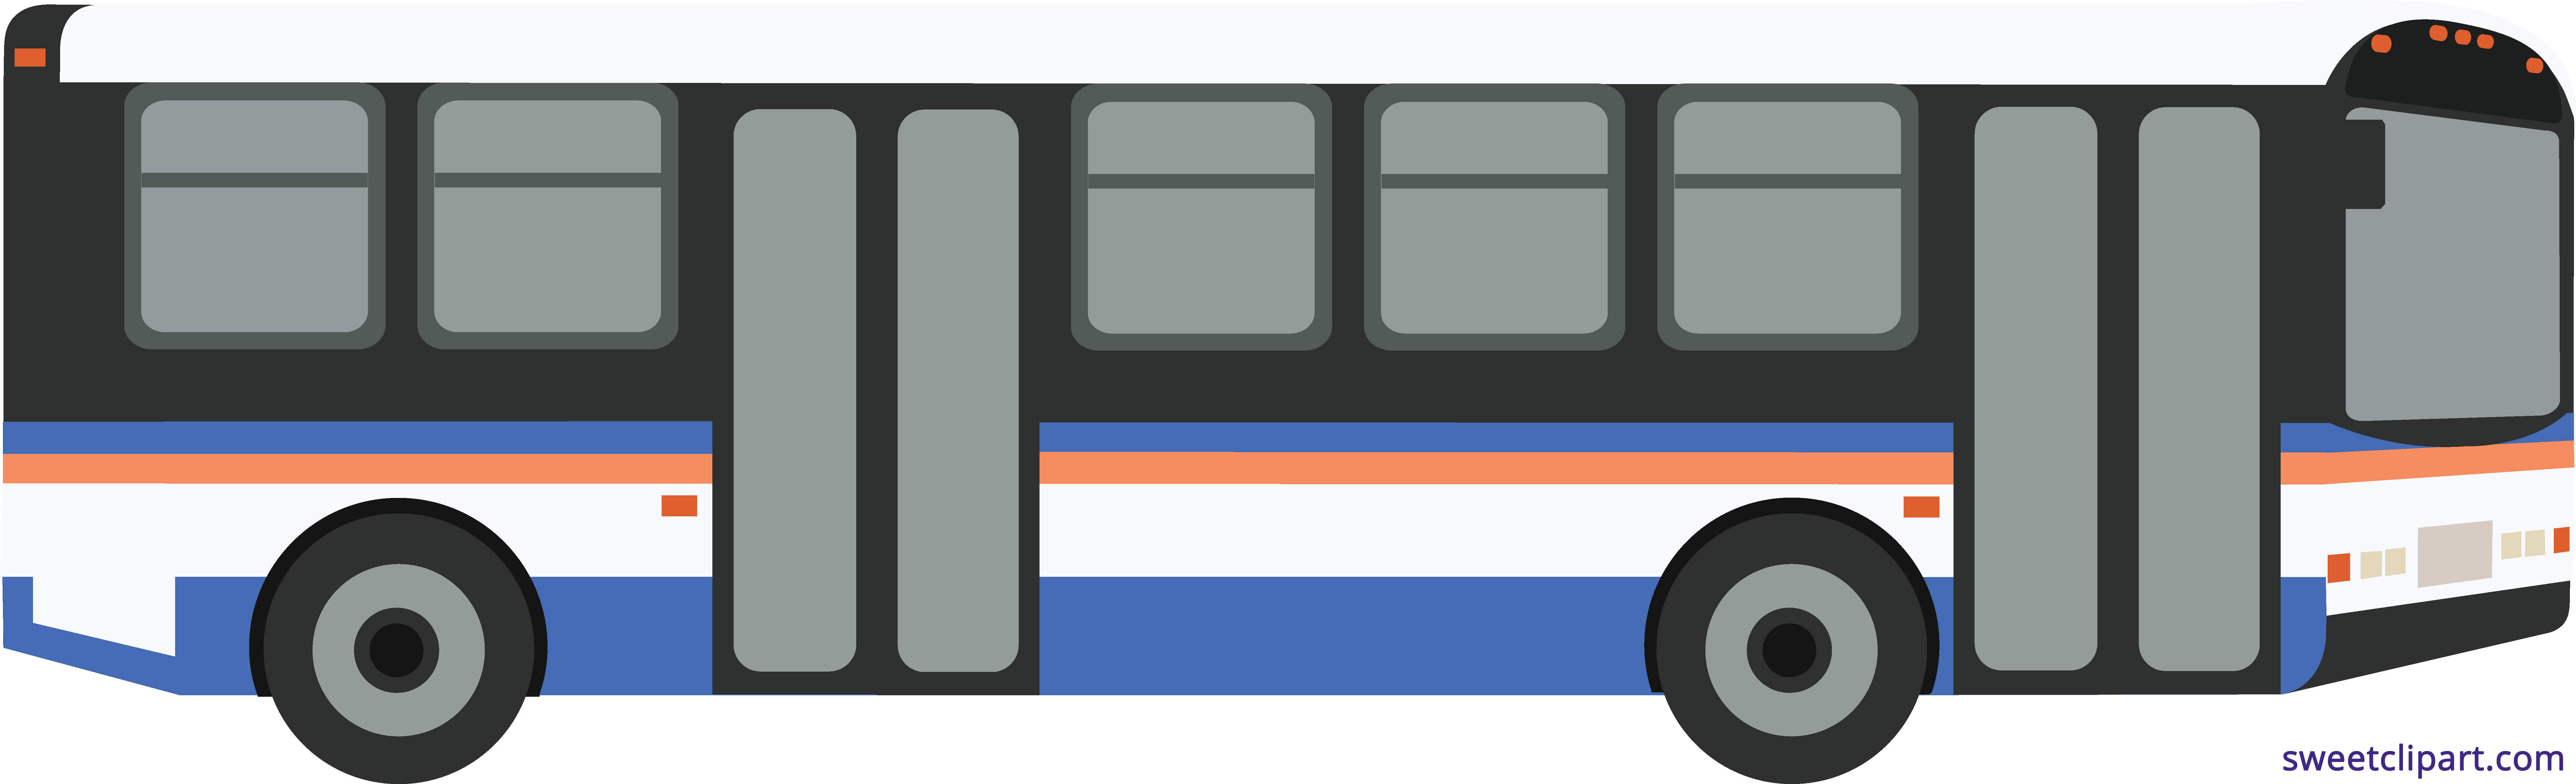 Bus public transit.